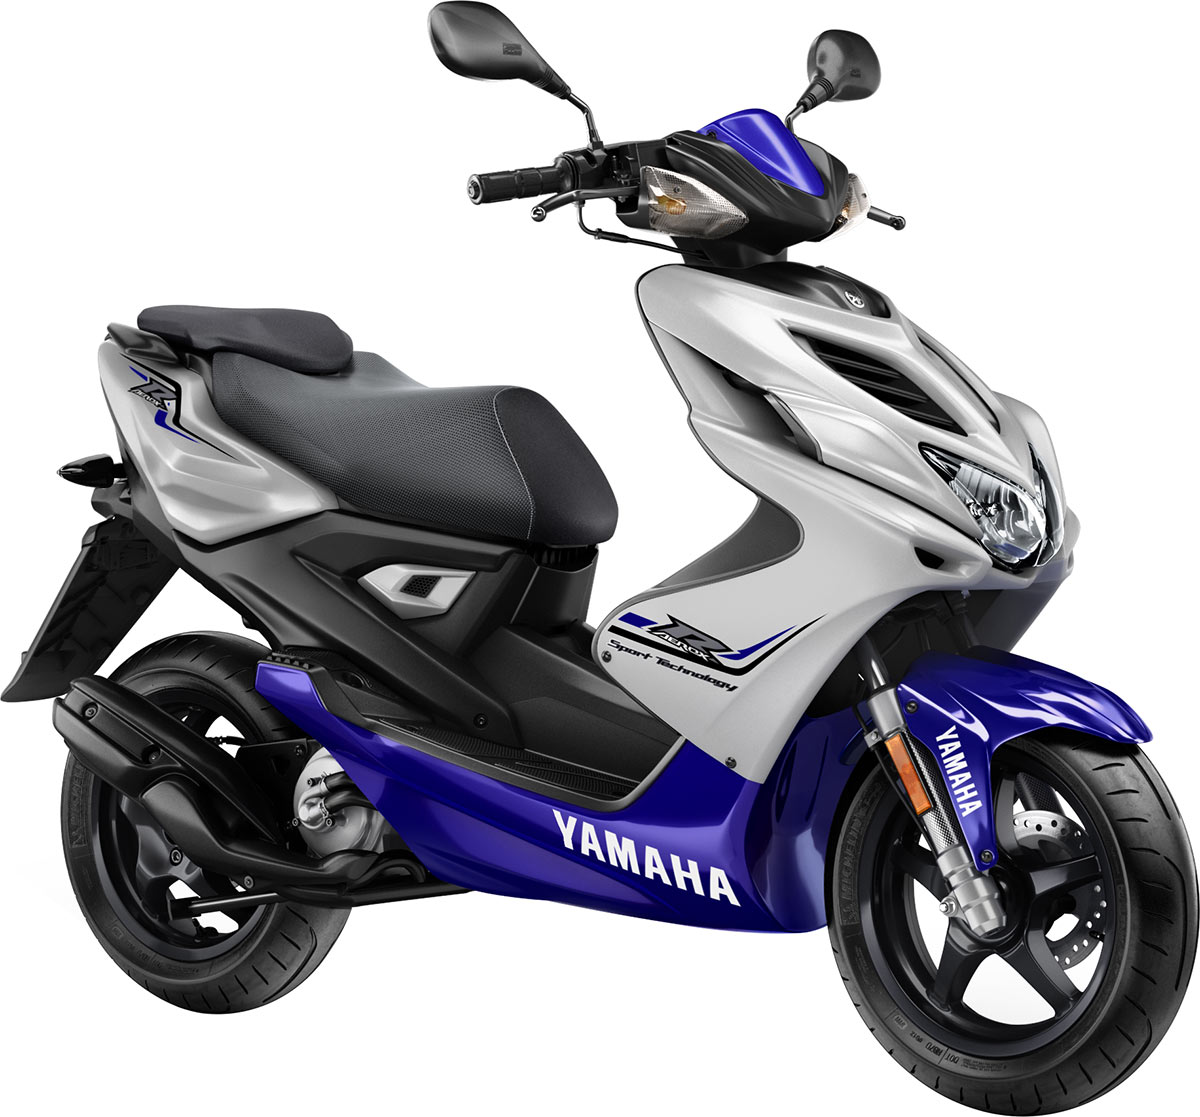 Le Yamaha Aerox 2015 privilégie la sportivité avec son look MotoGP